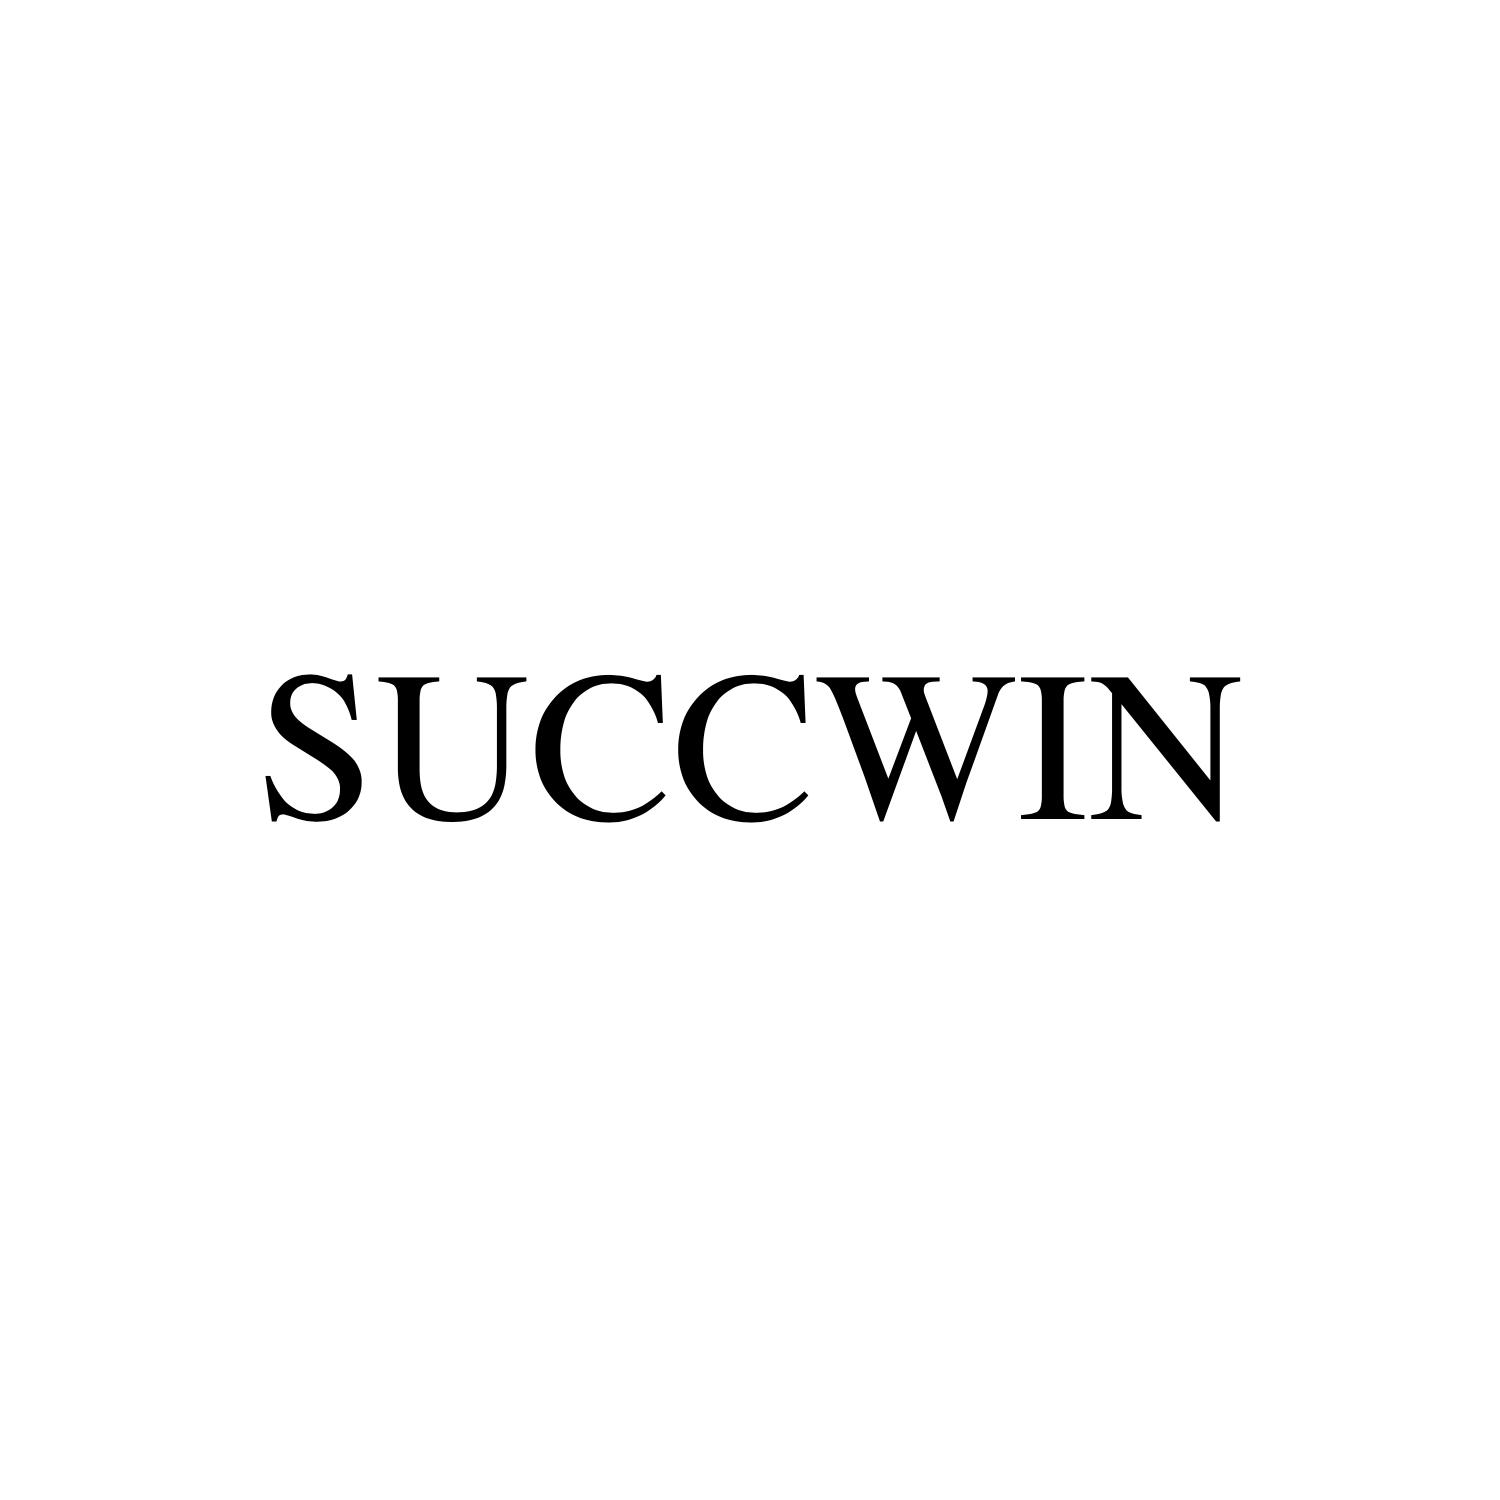 SUCCWIN